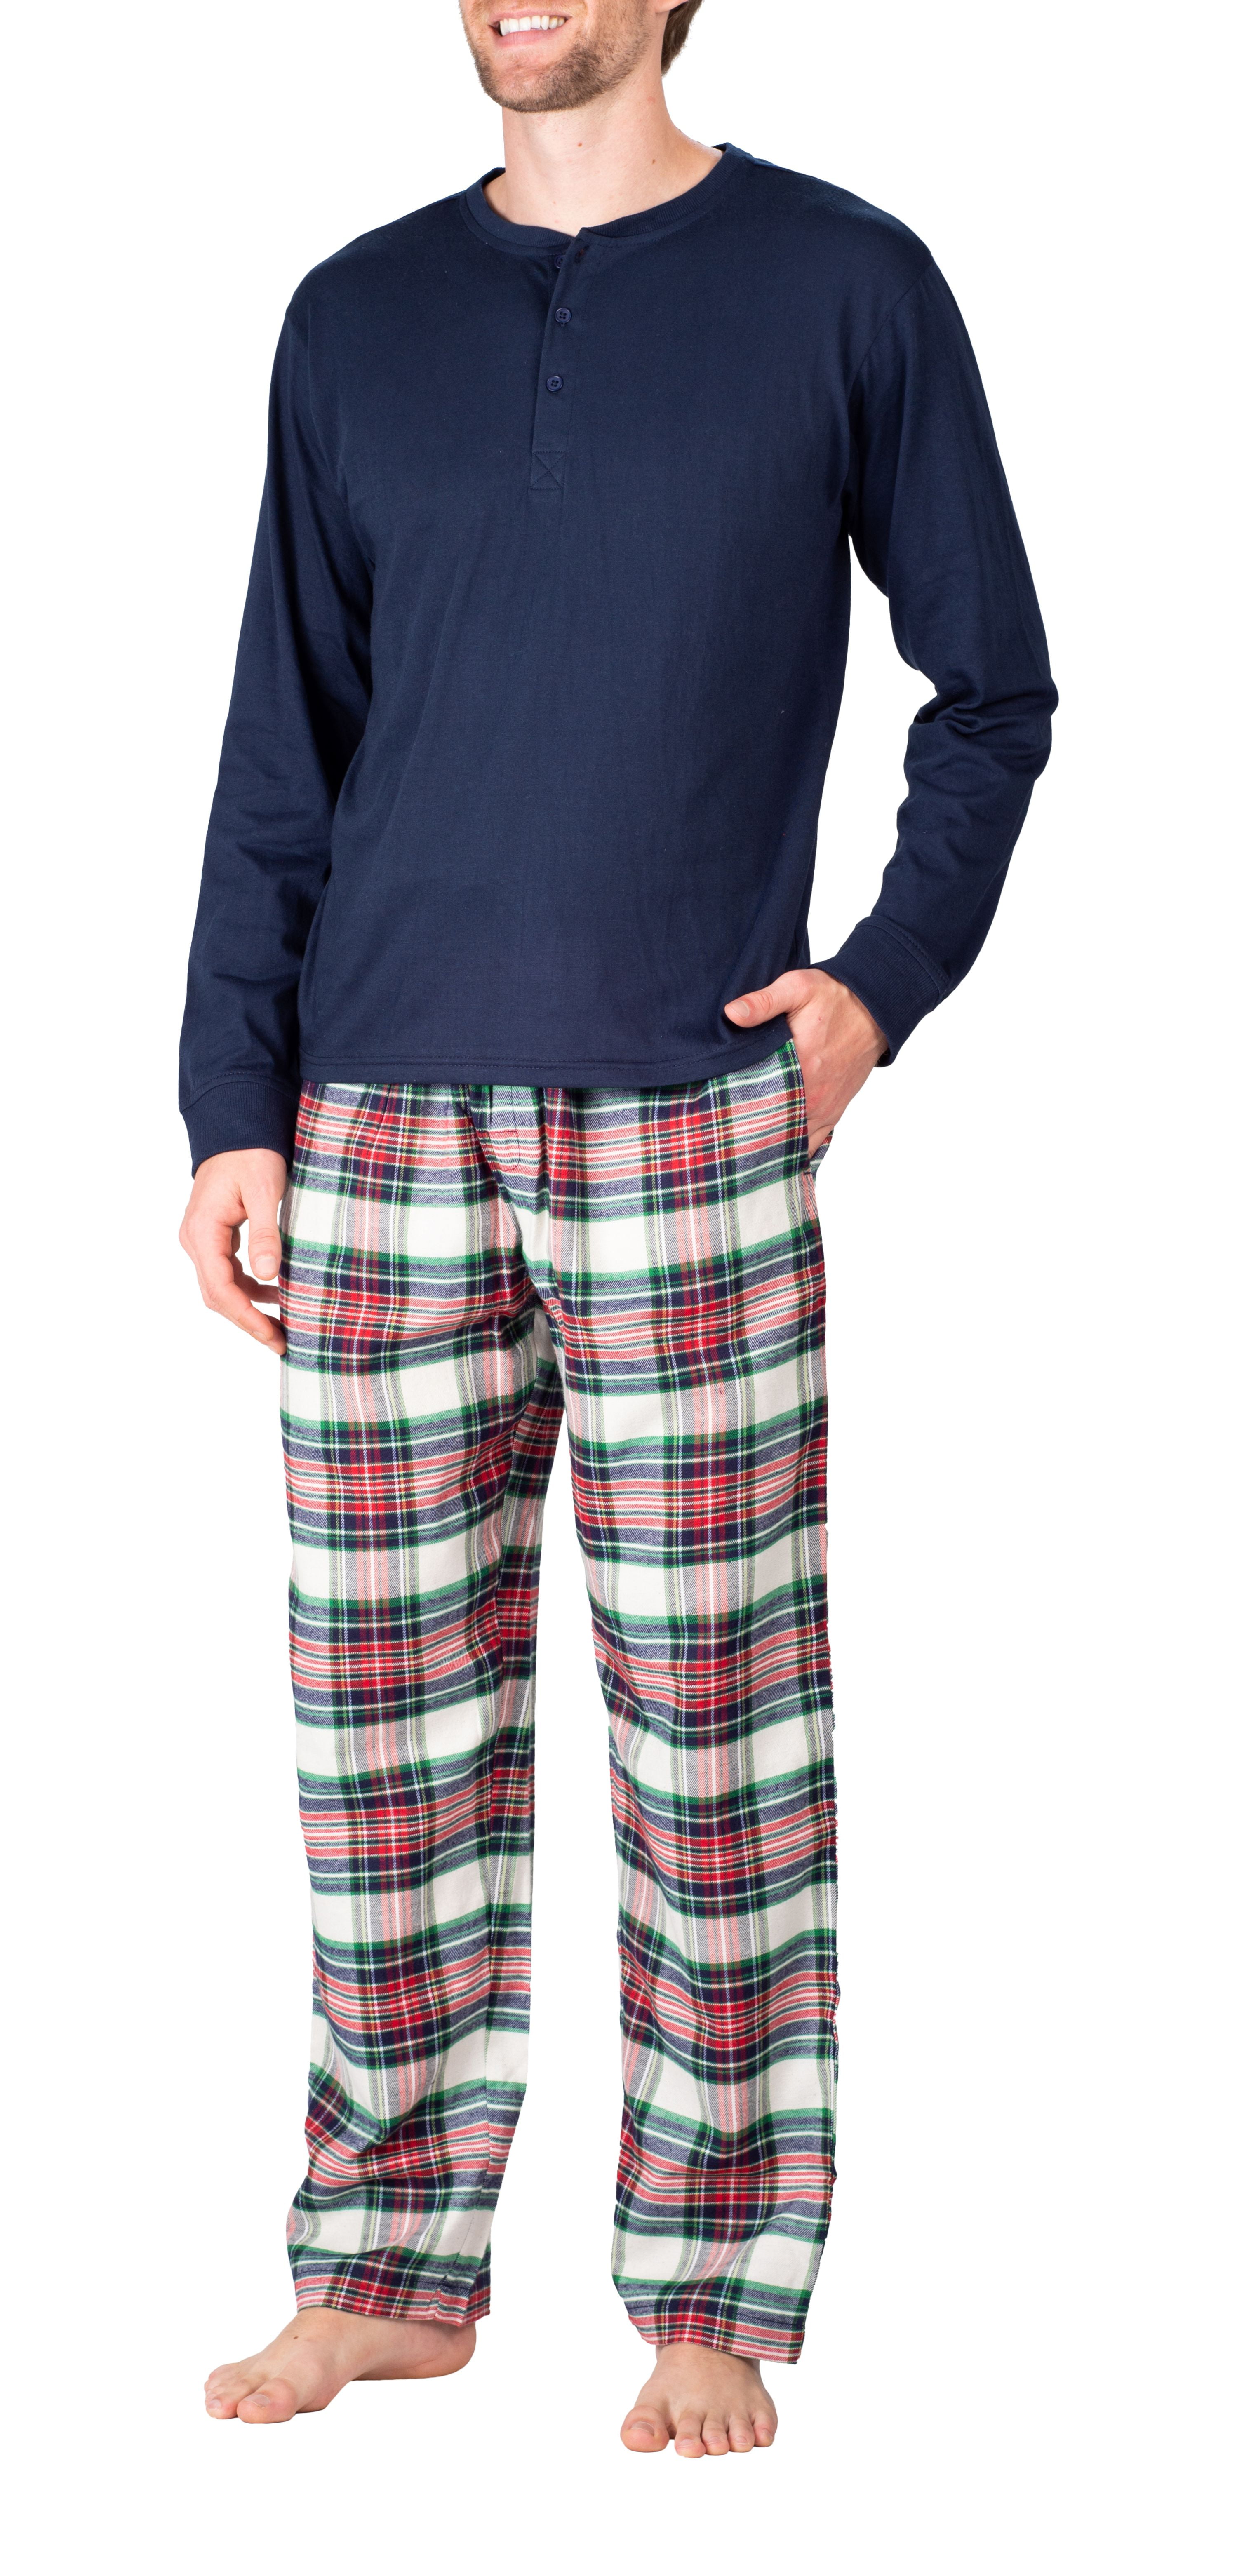 Meh Mens Grey Plaid Pajama Set Fleece Pajama Set, Pjs, Mens Pjs, Plaid  Pajamas, Gift for Him, Dad, Teen, College, Sarcasm, Plus Size 